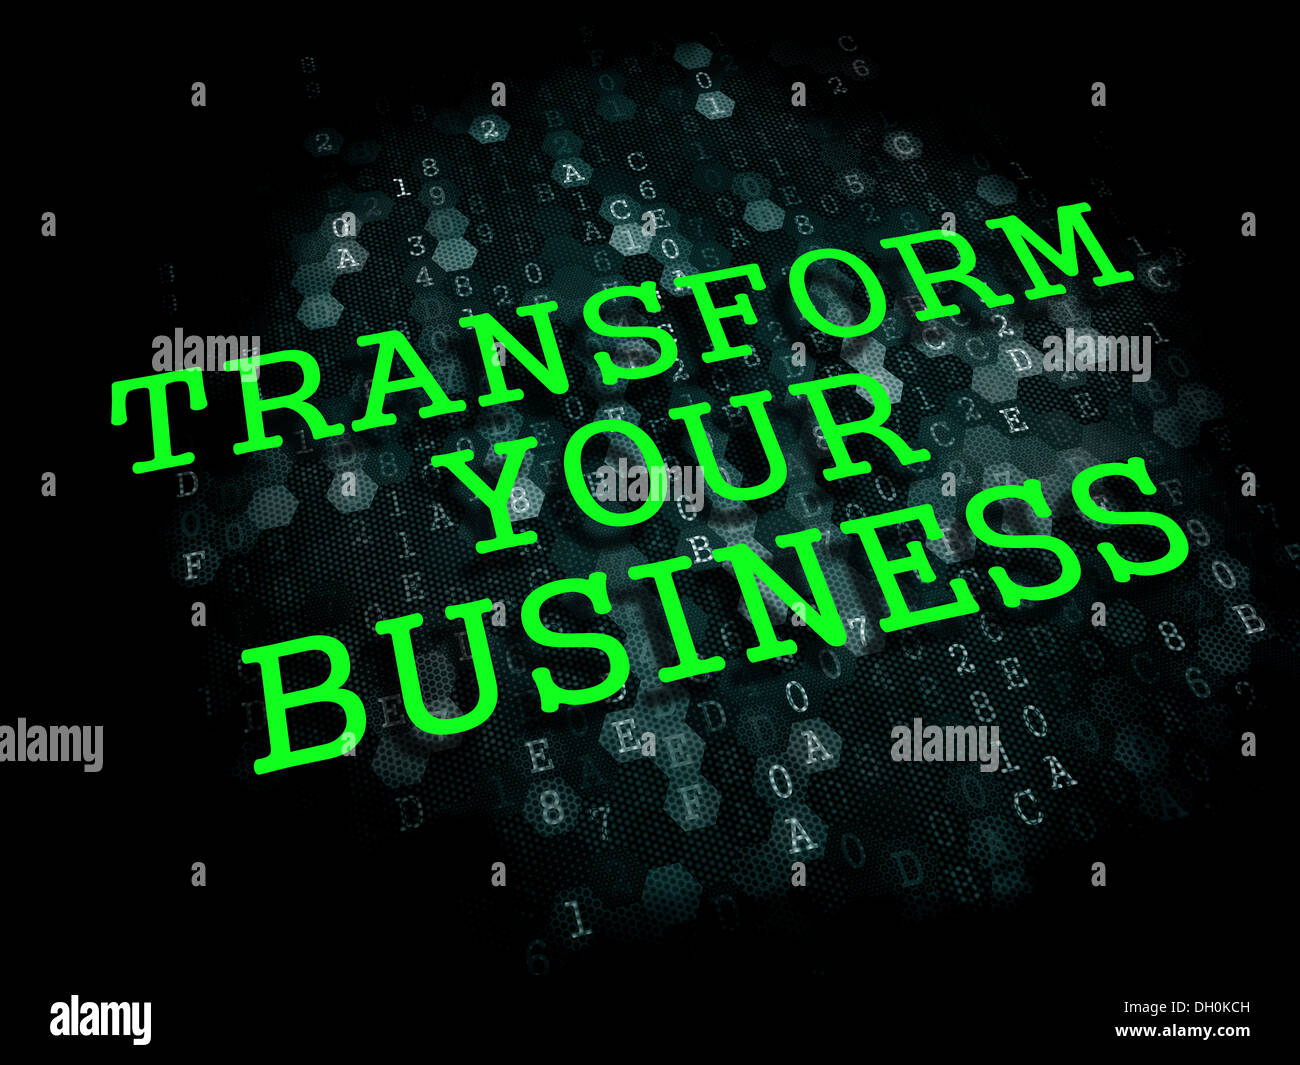 Transform Your Business Concept. Stock Photo